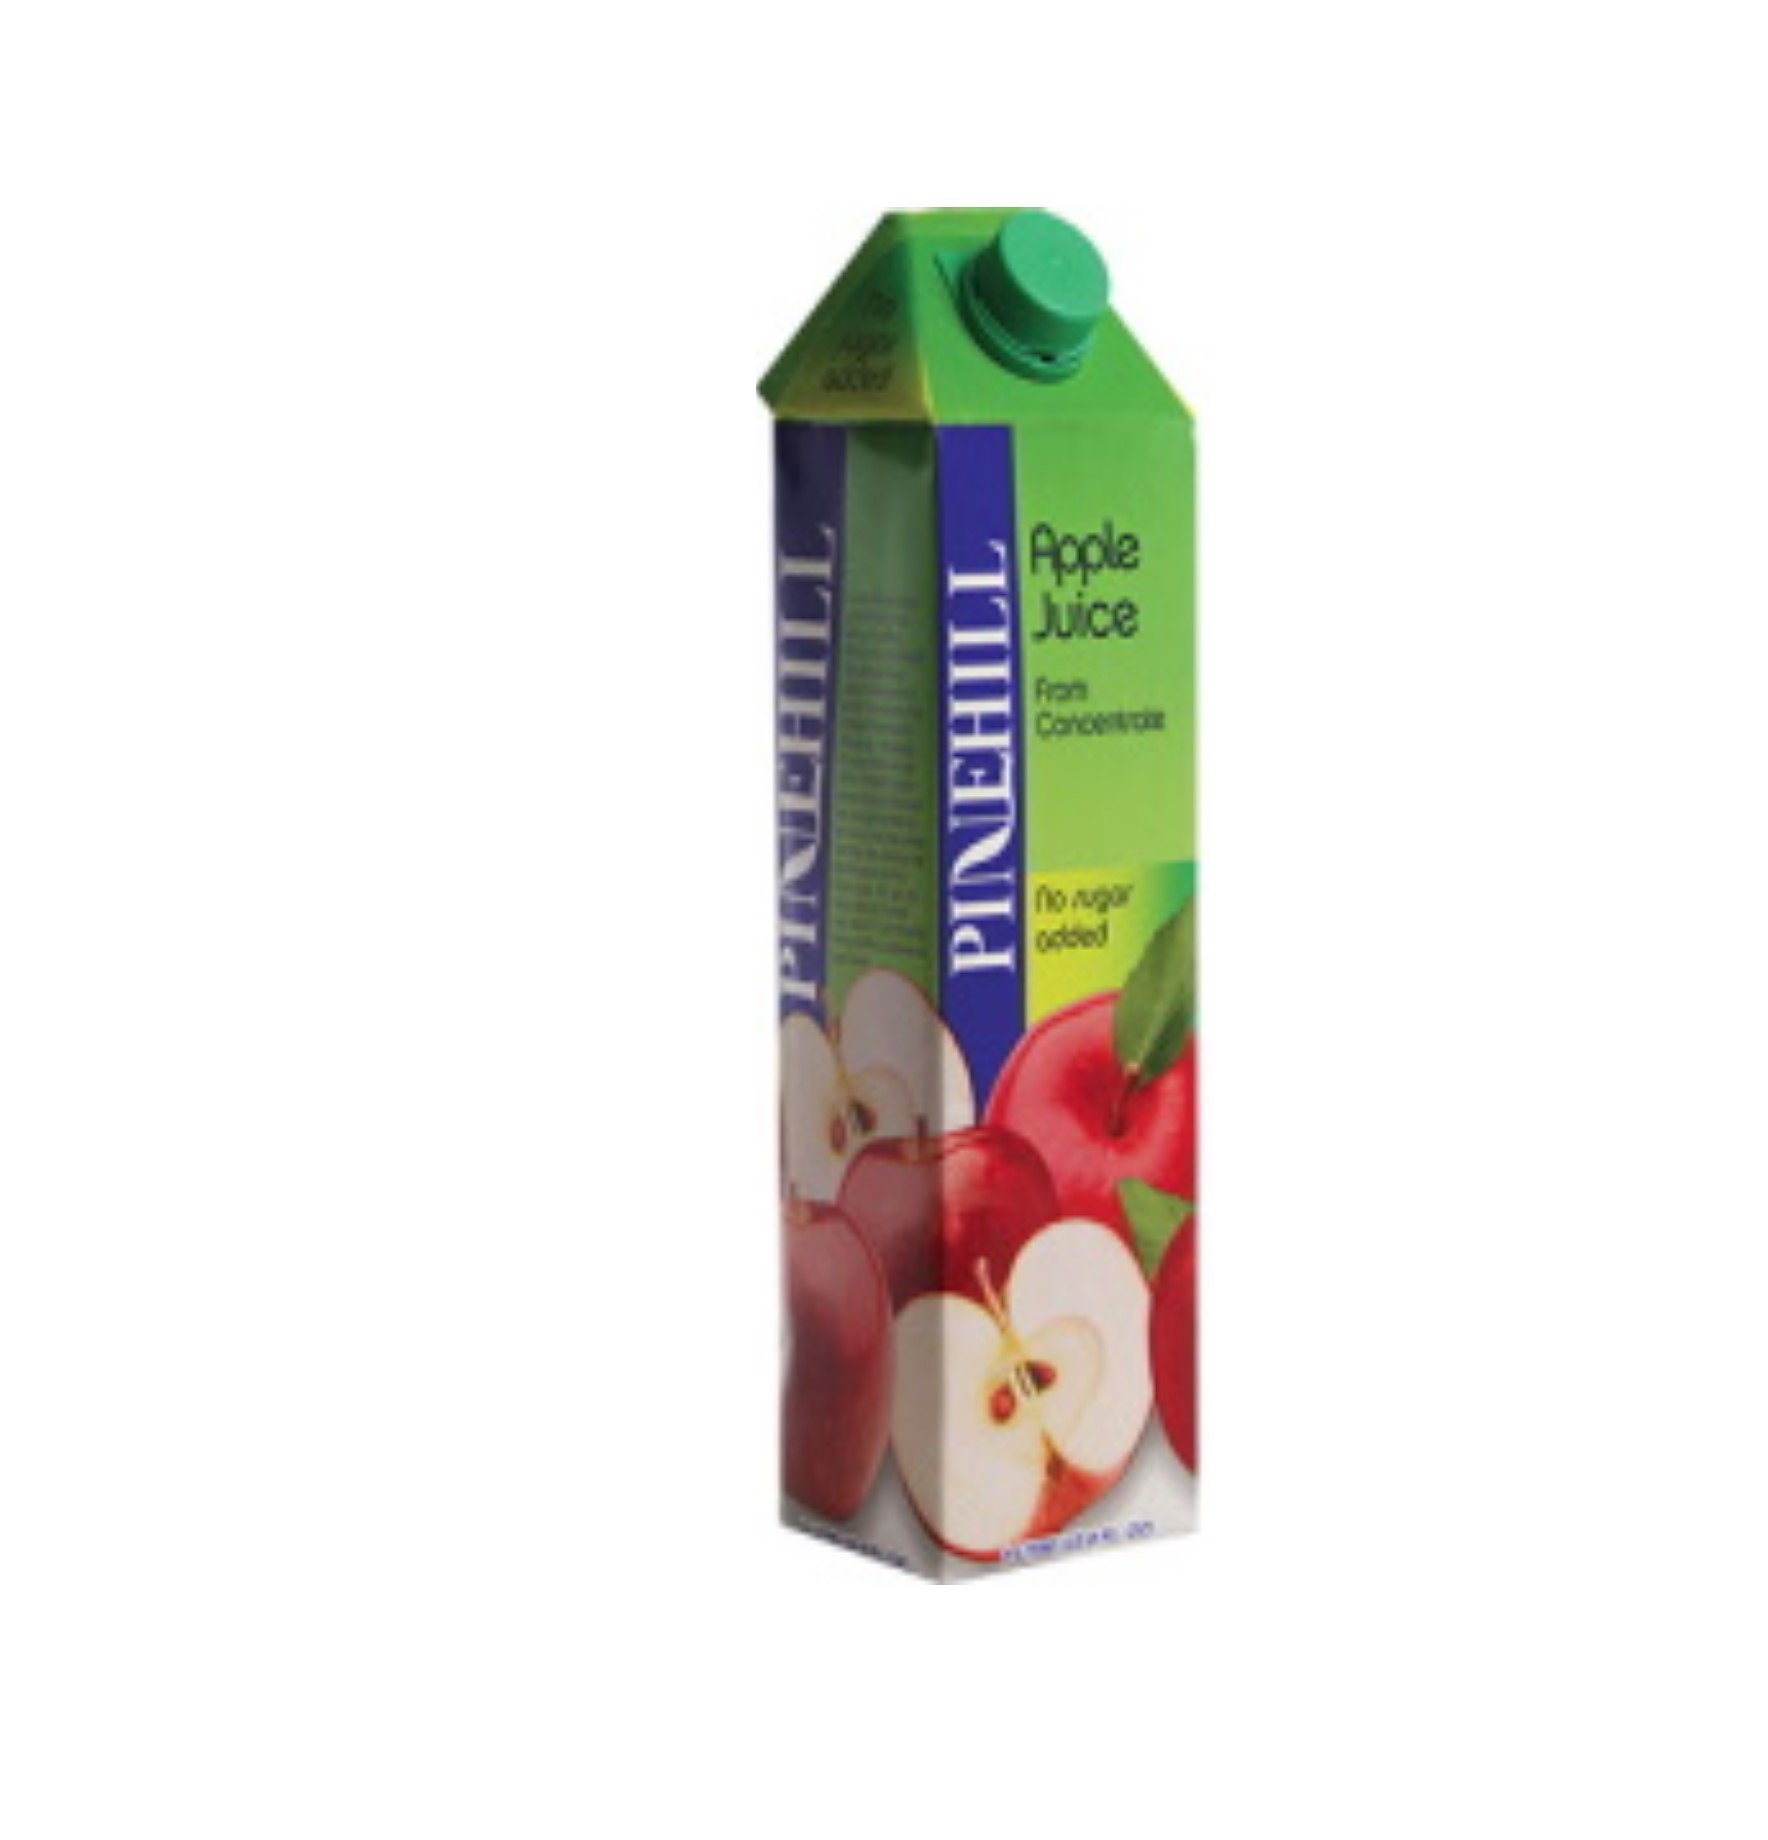 Pinehill Apple Juice 1L